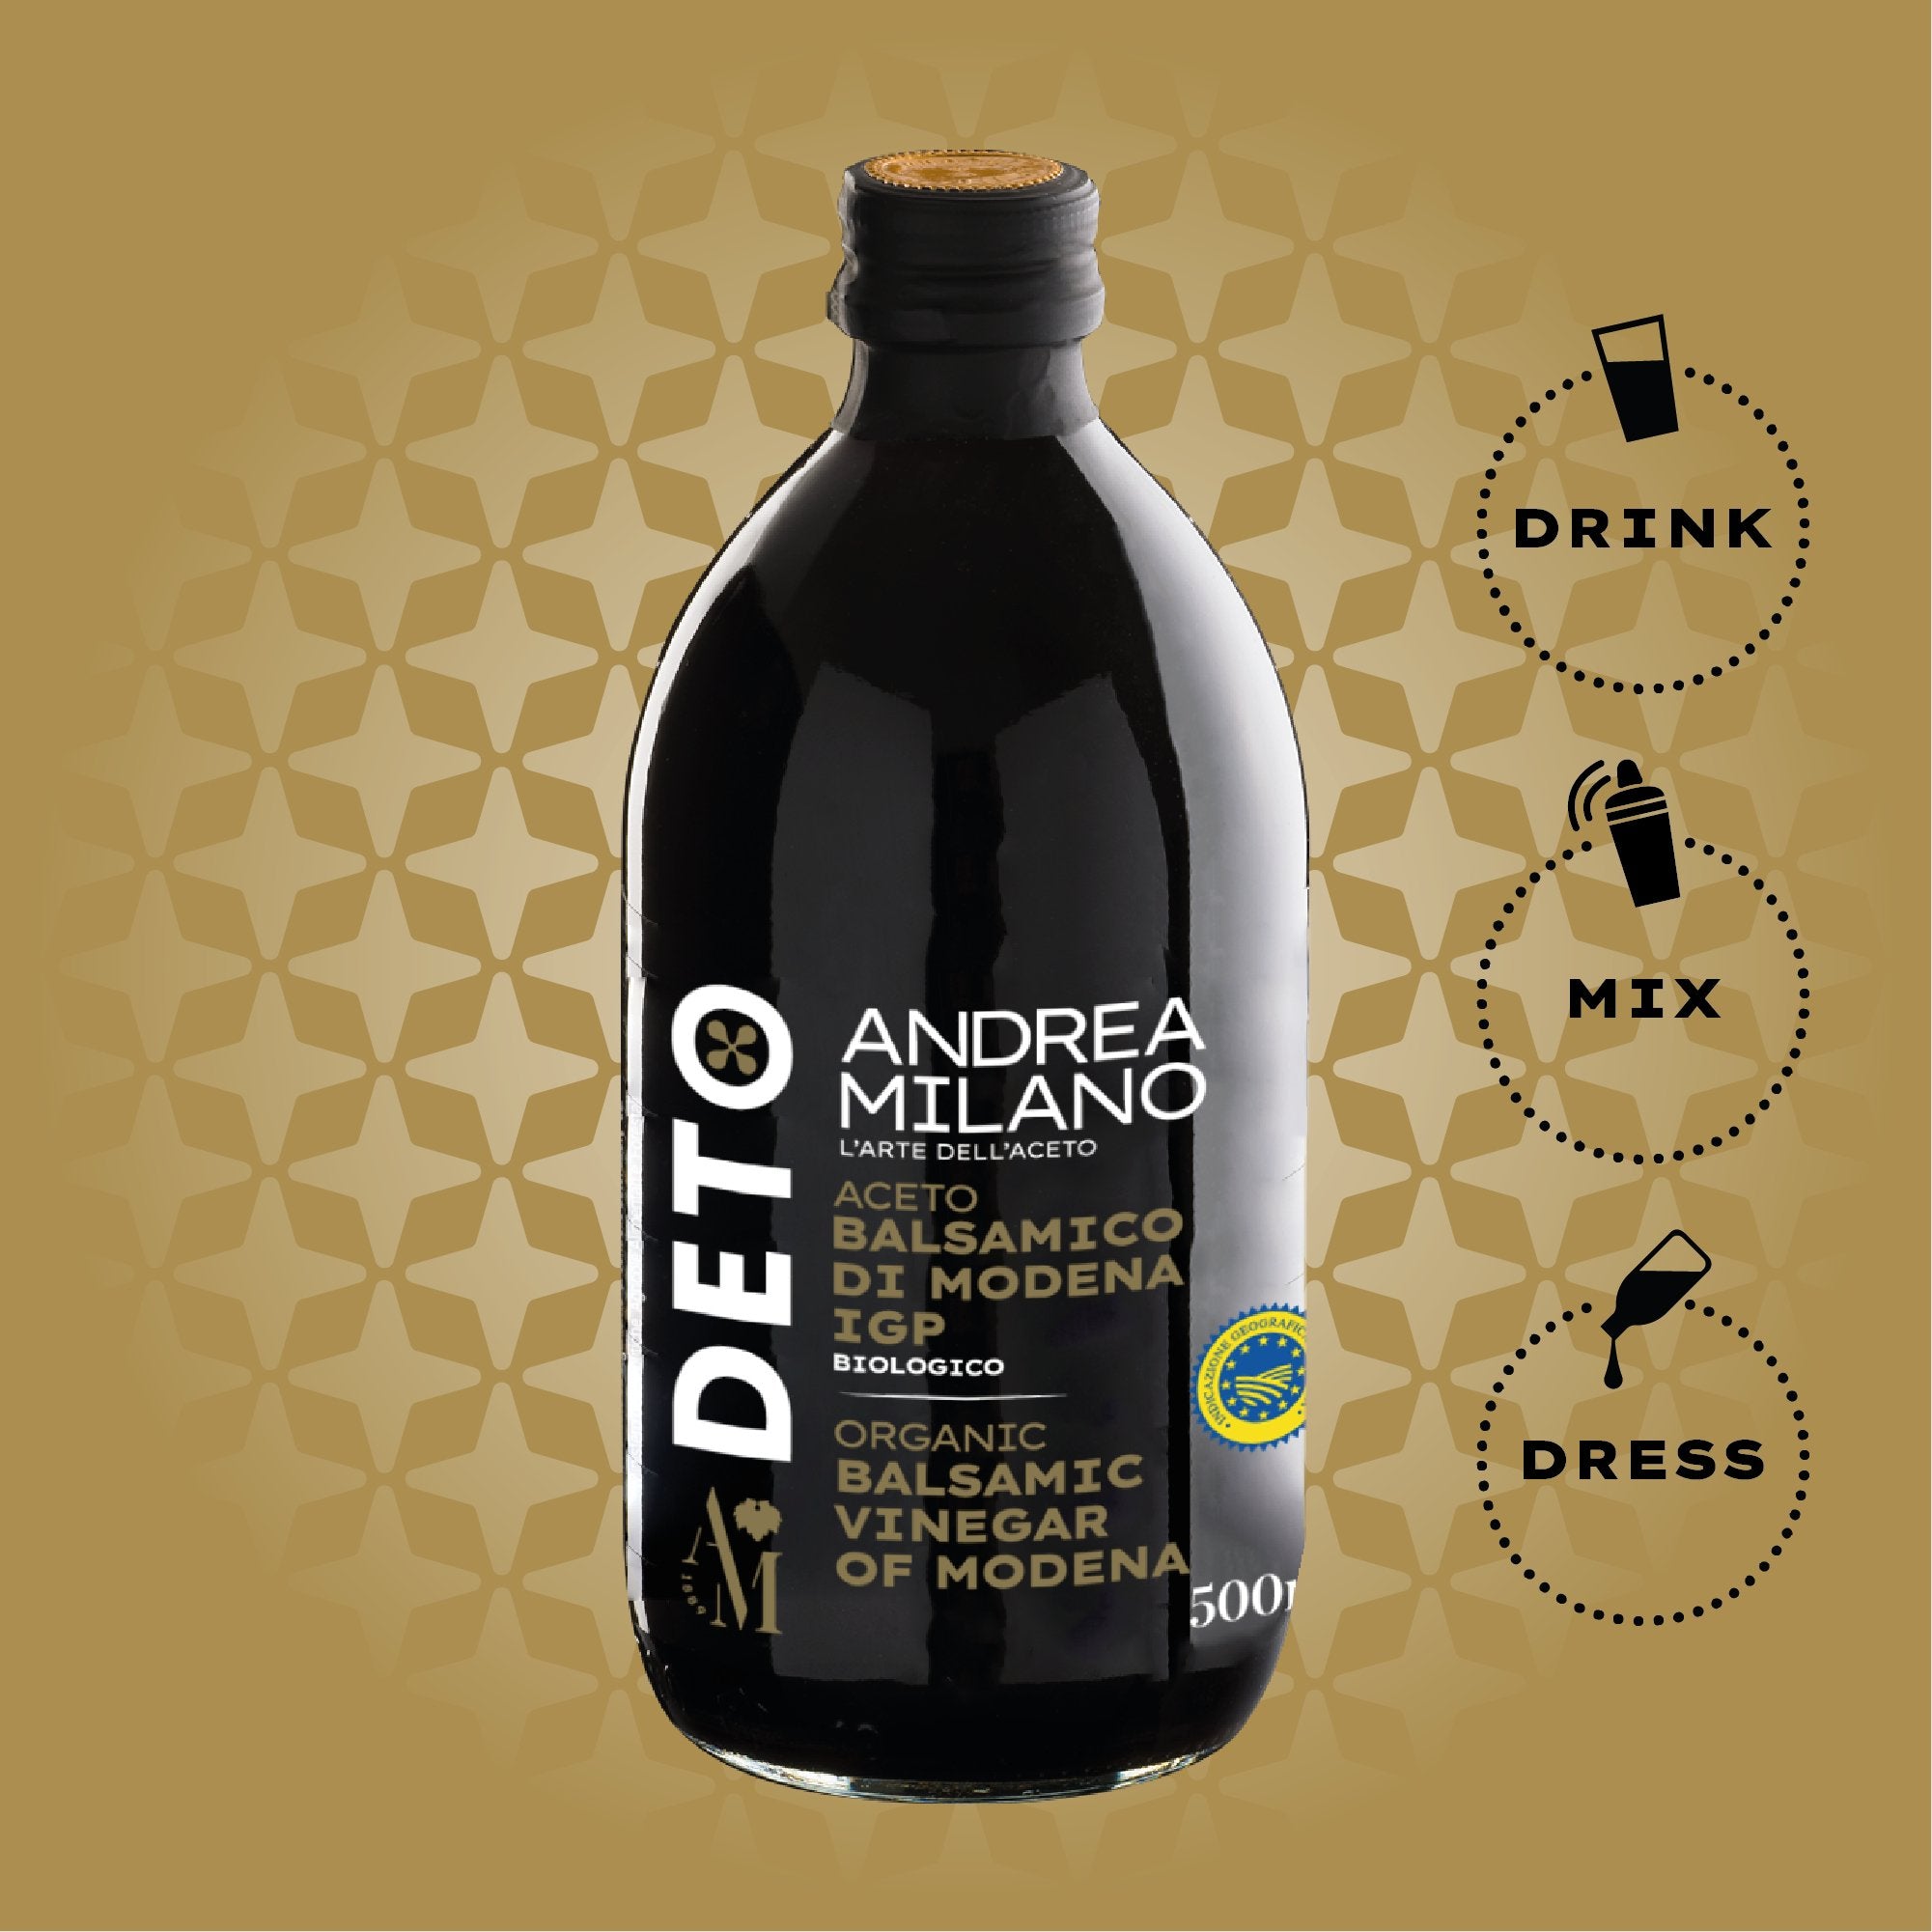 How to use Deto organic Balsamic Vinegar of Modena by Andrea Milano.